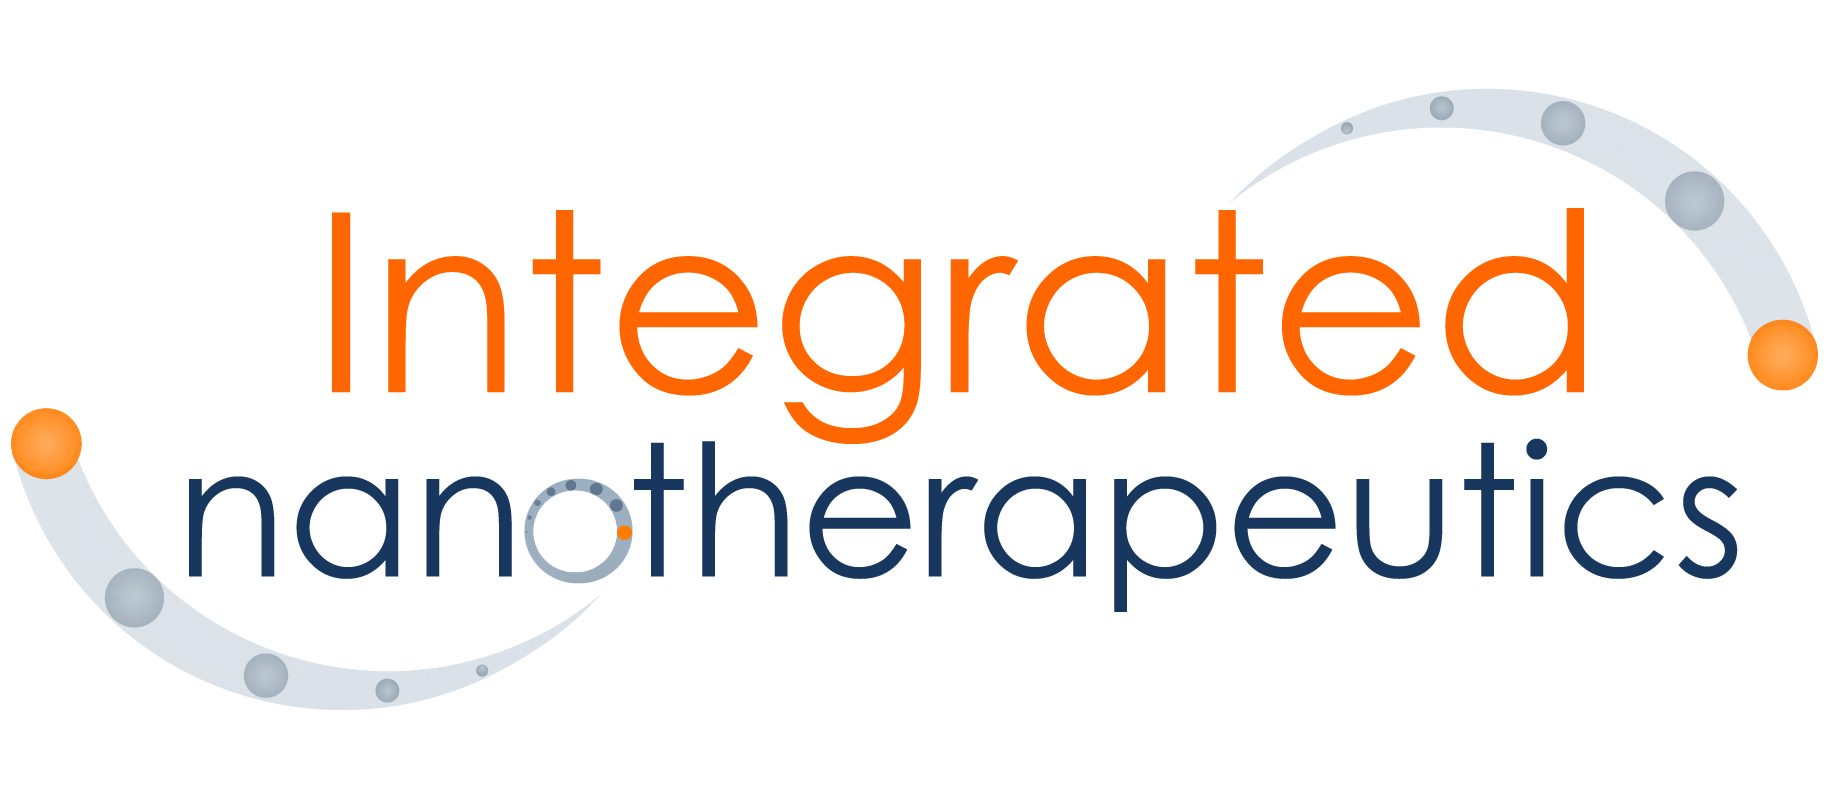 Integrated_Nanotherapeutics_Logo